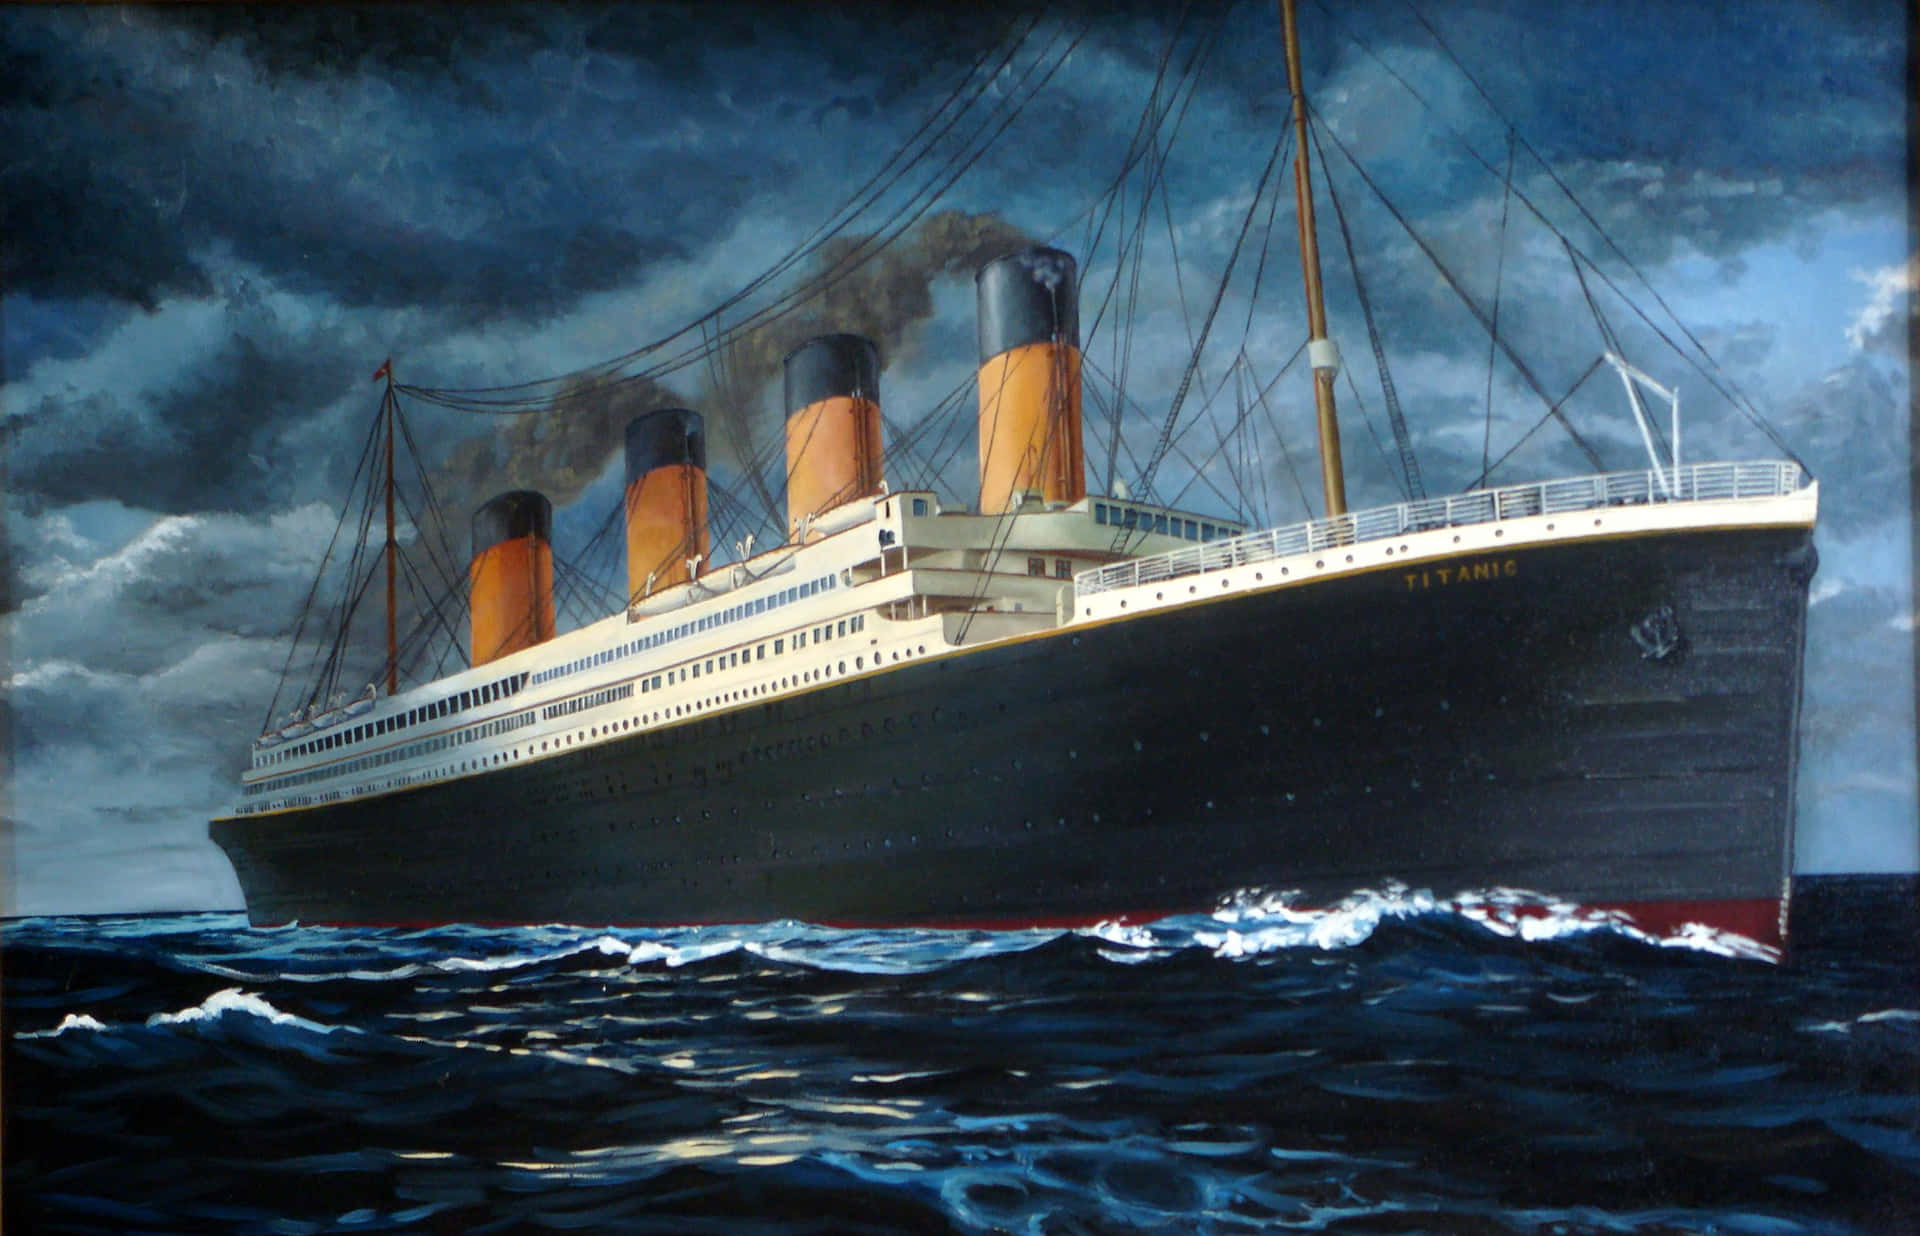 The Iconic Titanic Making its Last Voyage